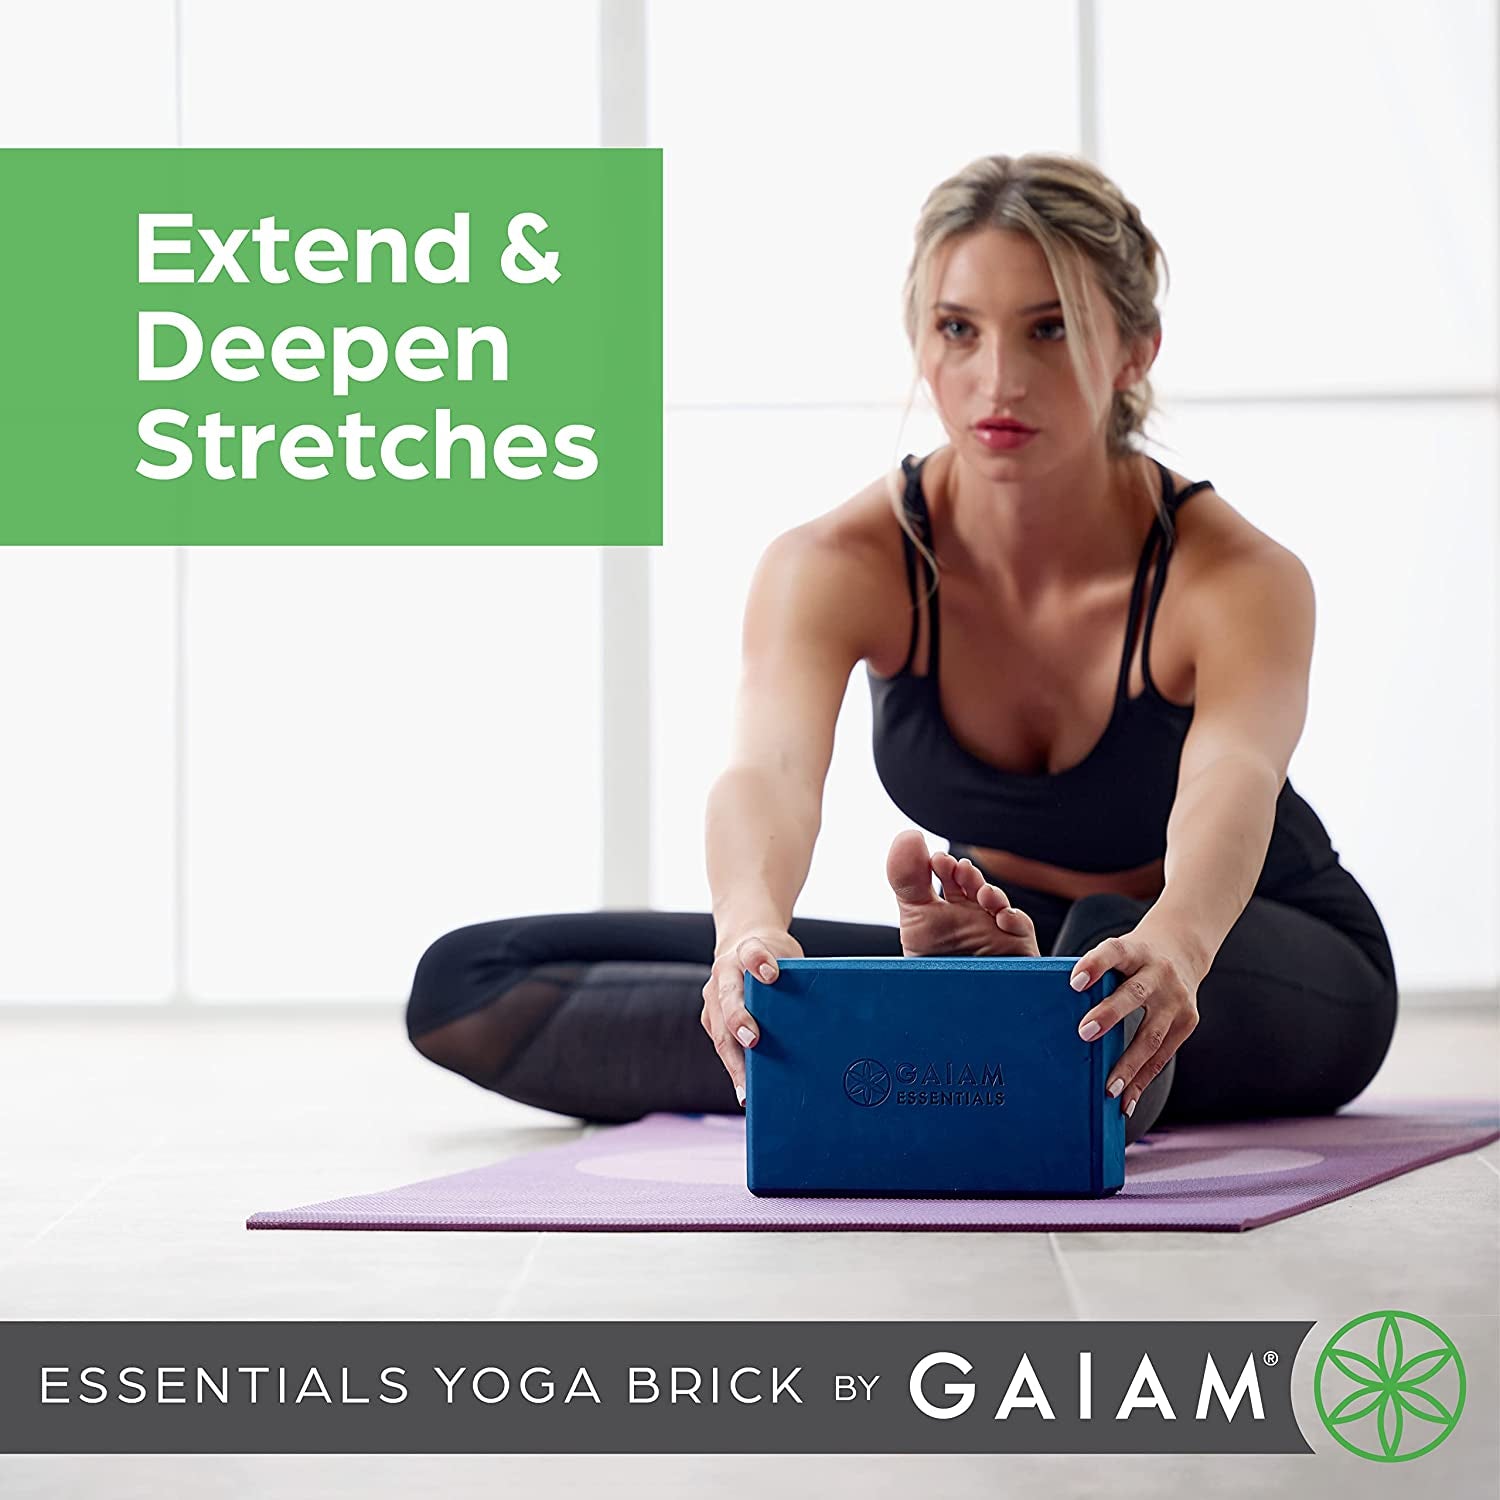 Essentials Yoga Brick | Sold as Single Block | EVA Foam Block Accessories for Yoga